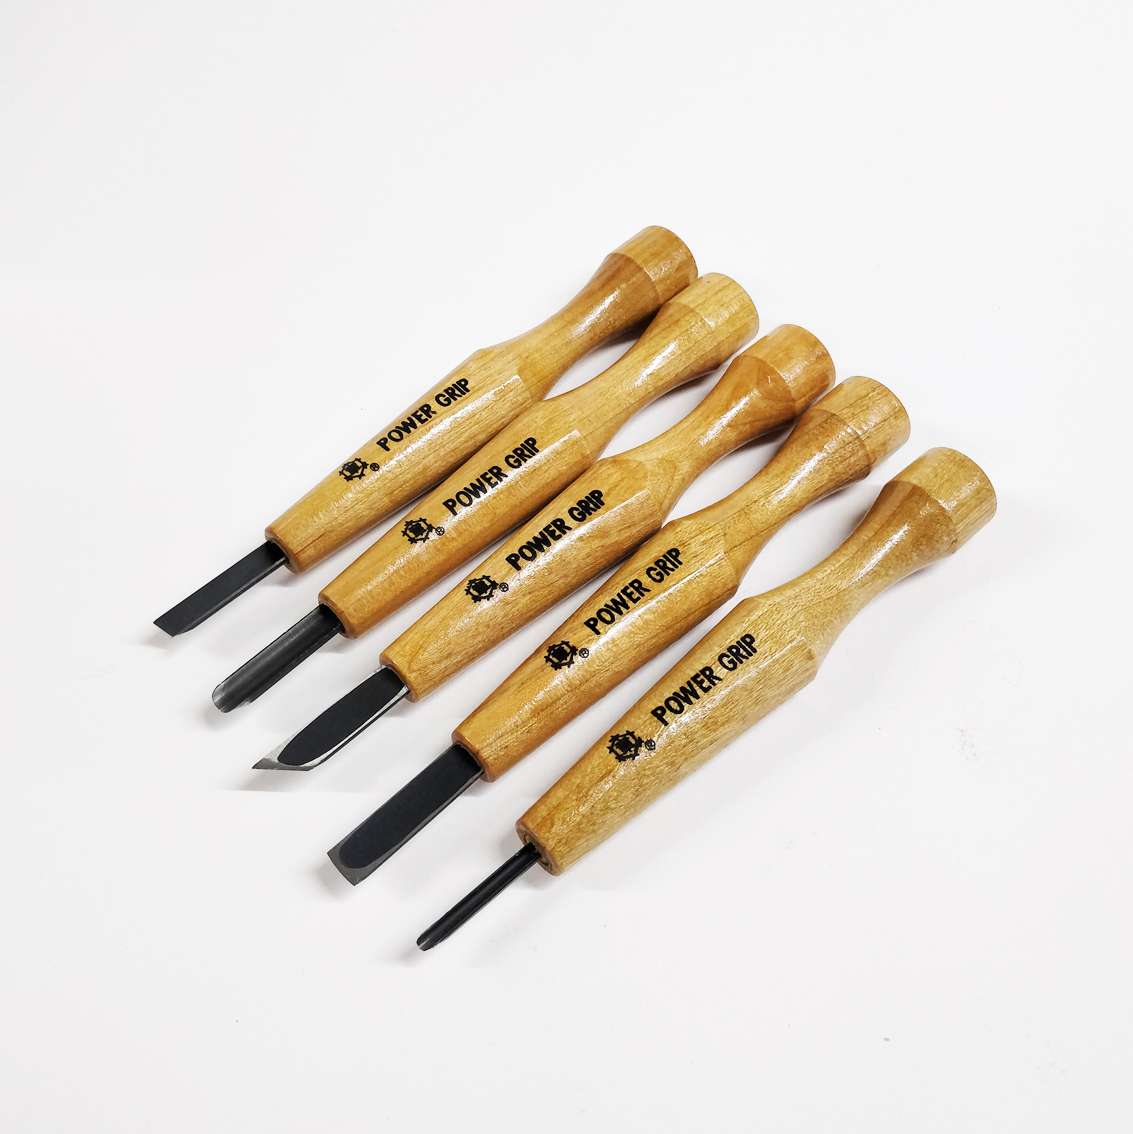 Mikisyo Japanese Power Grip Wood Carving Tool Kit set 7pcs From Japan